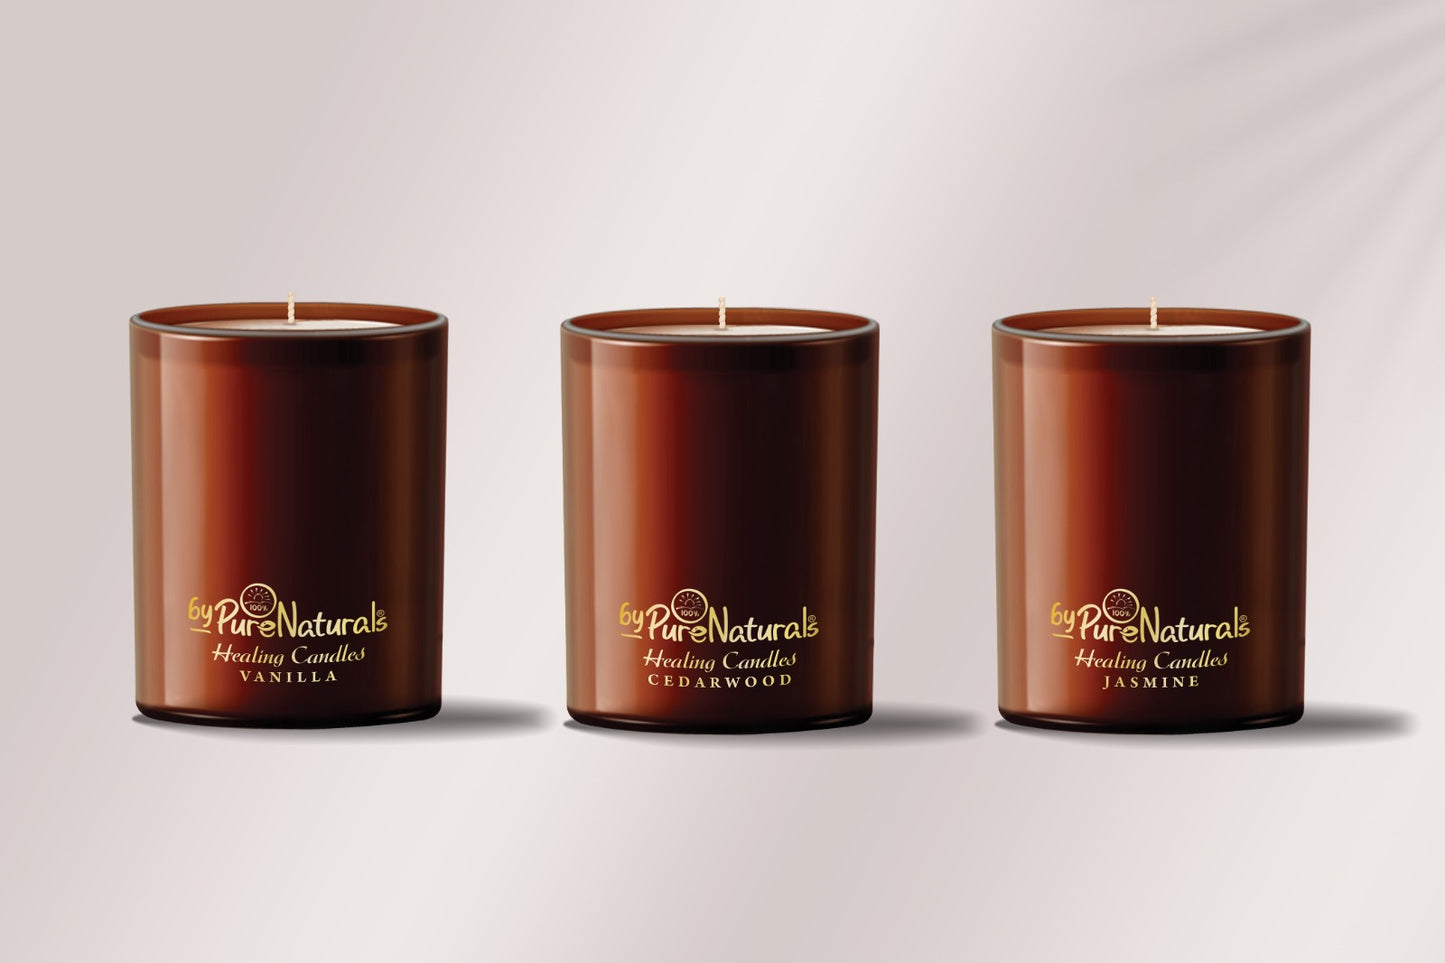 byPureNaturals Premium Healing Candles Pack of 3